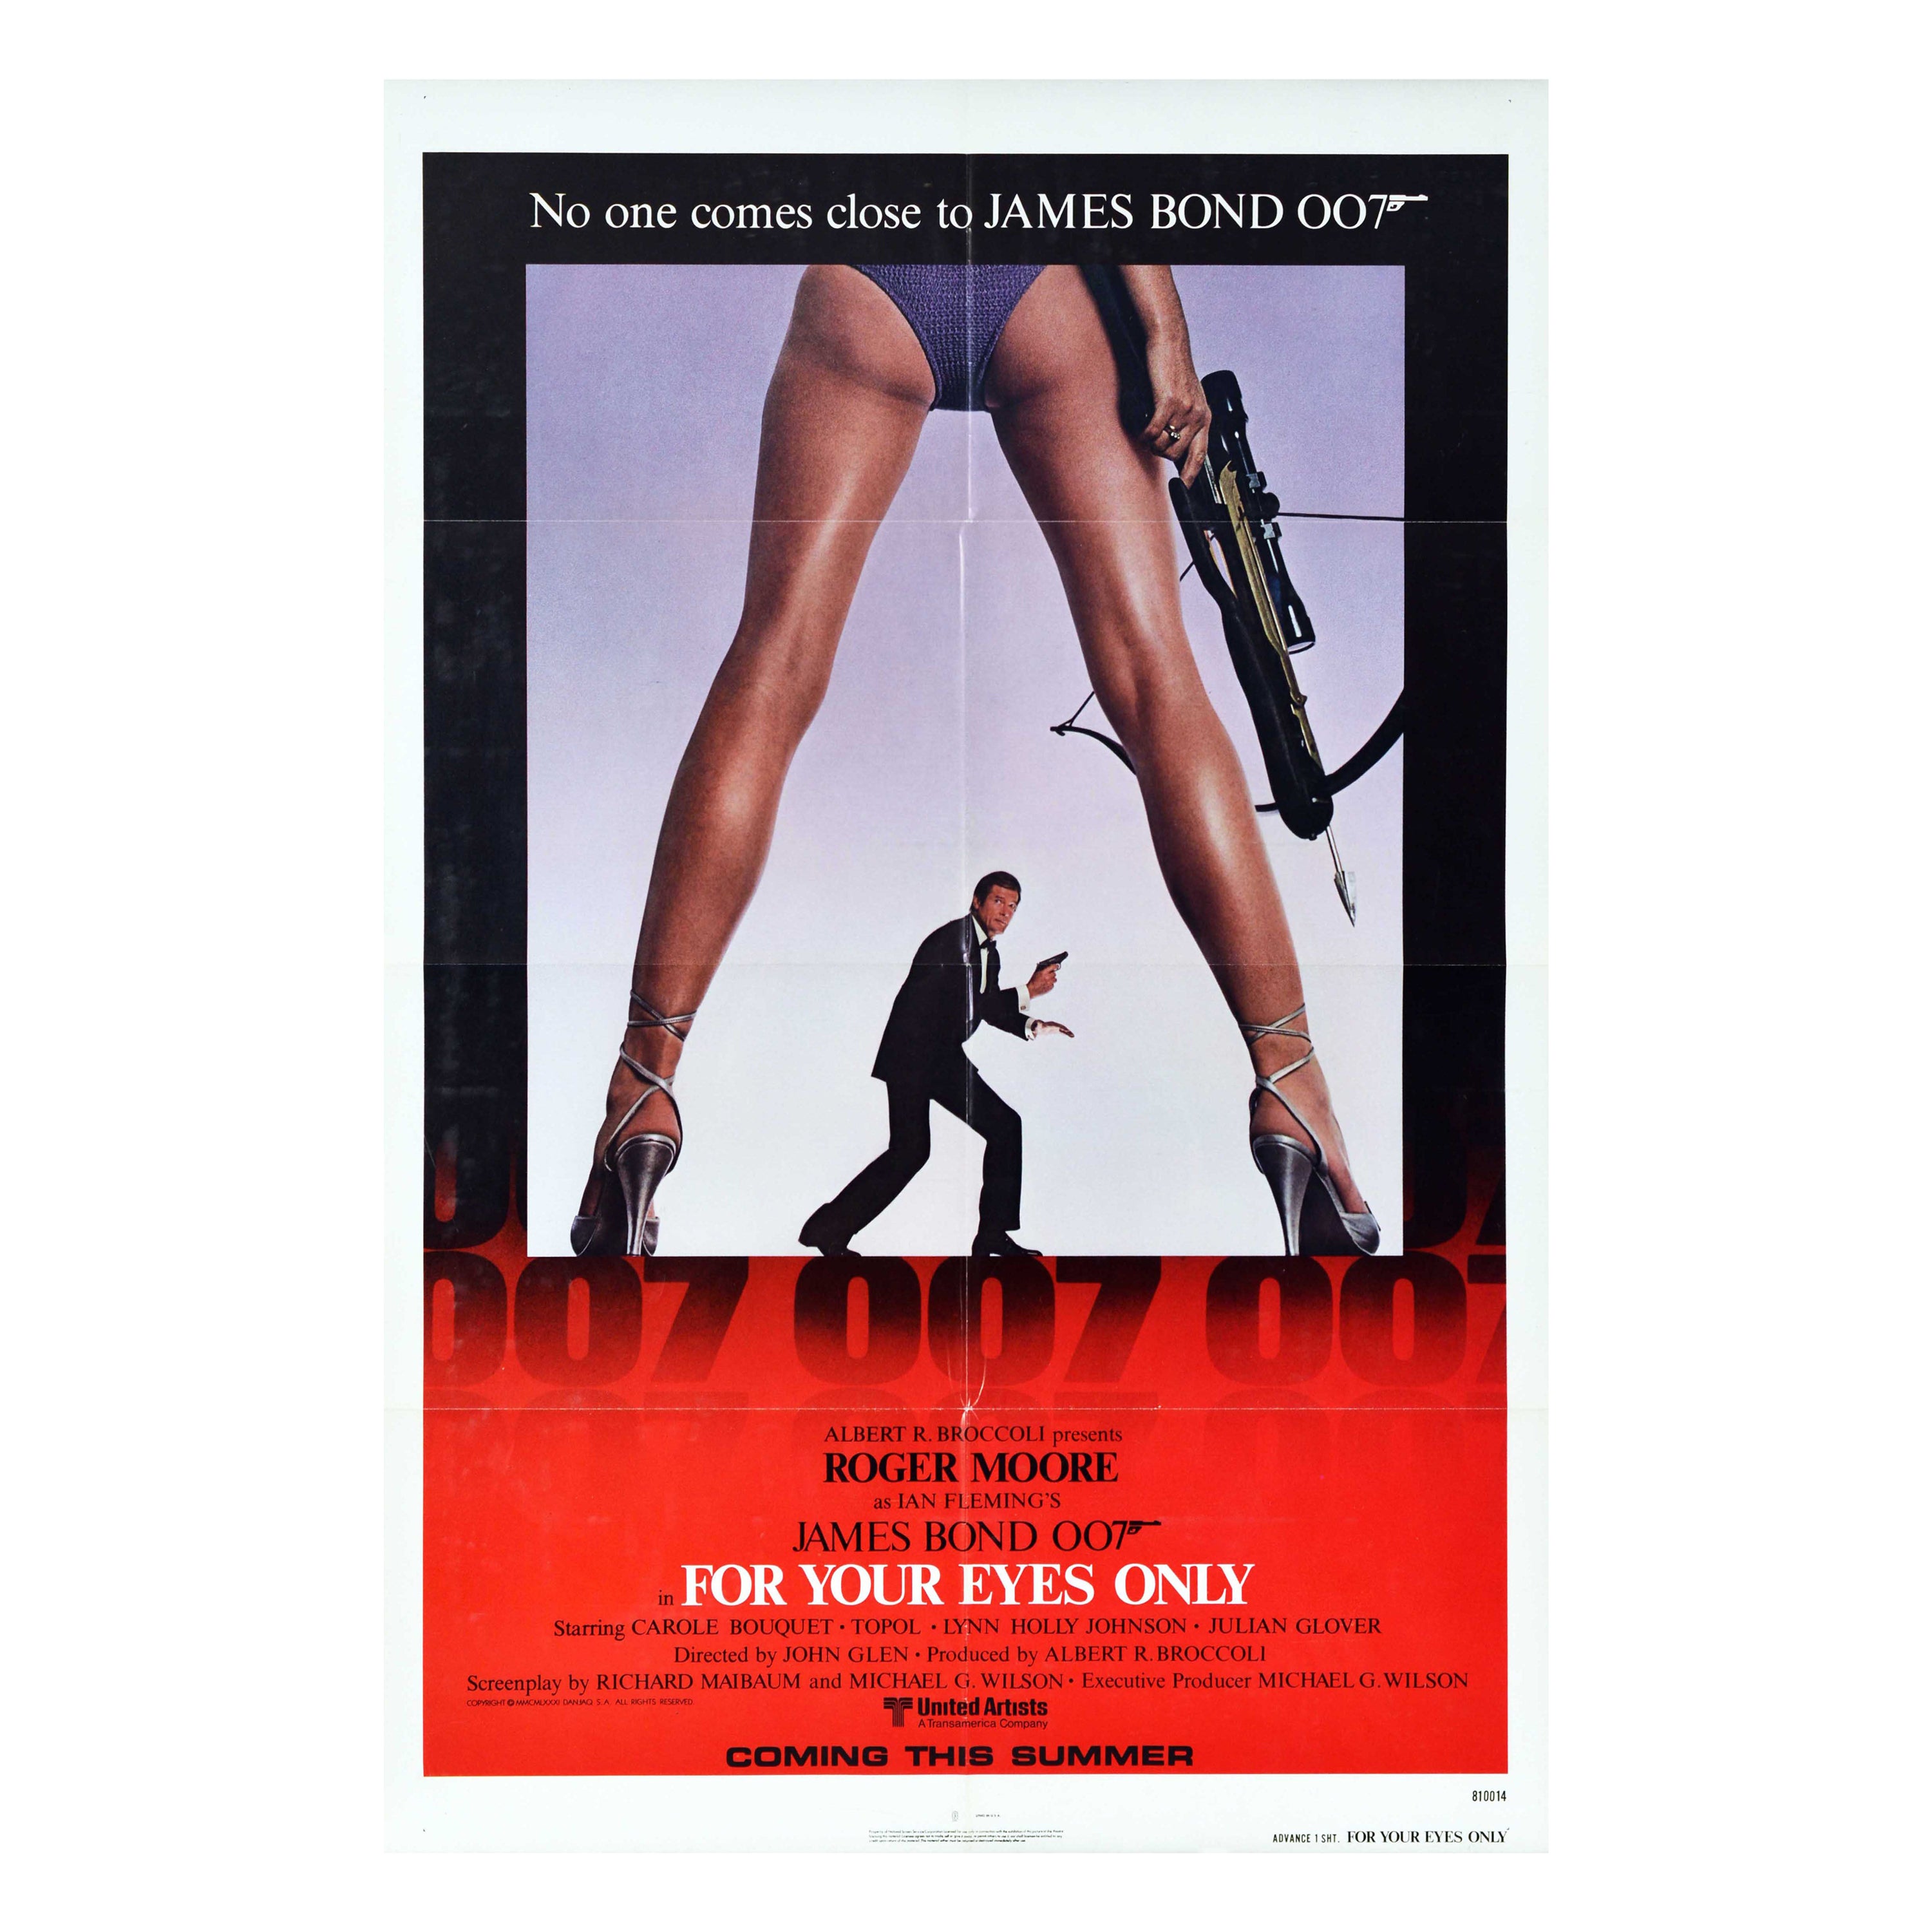 Original Vintage James Bond Poster For Your Eyes Only Legs Campaign 007 Film Art